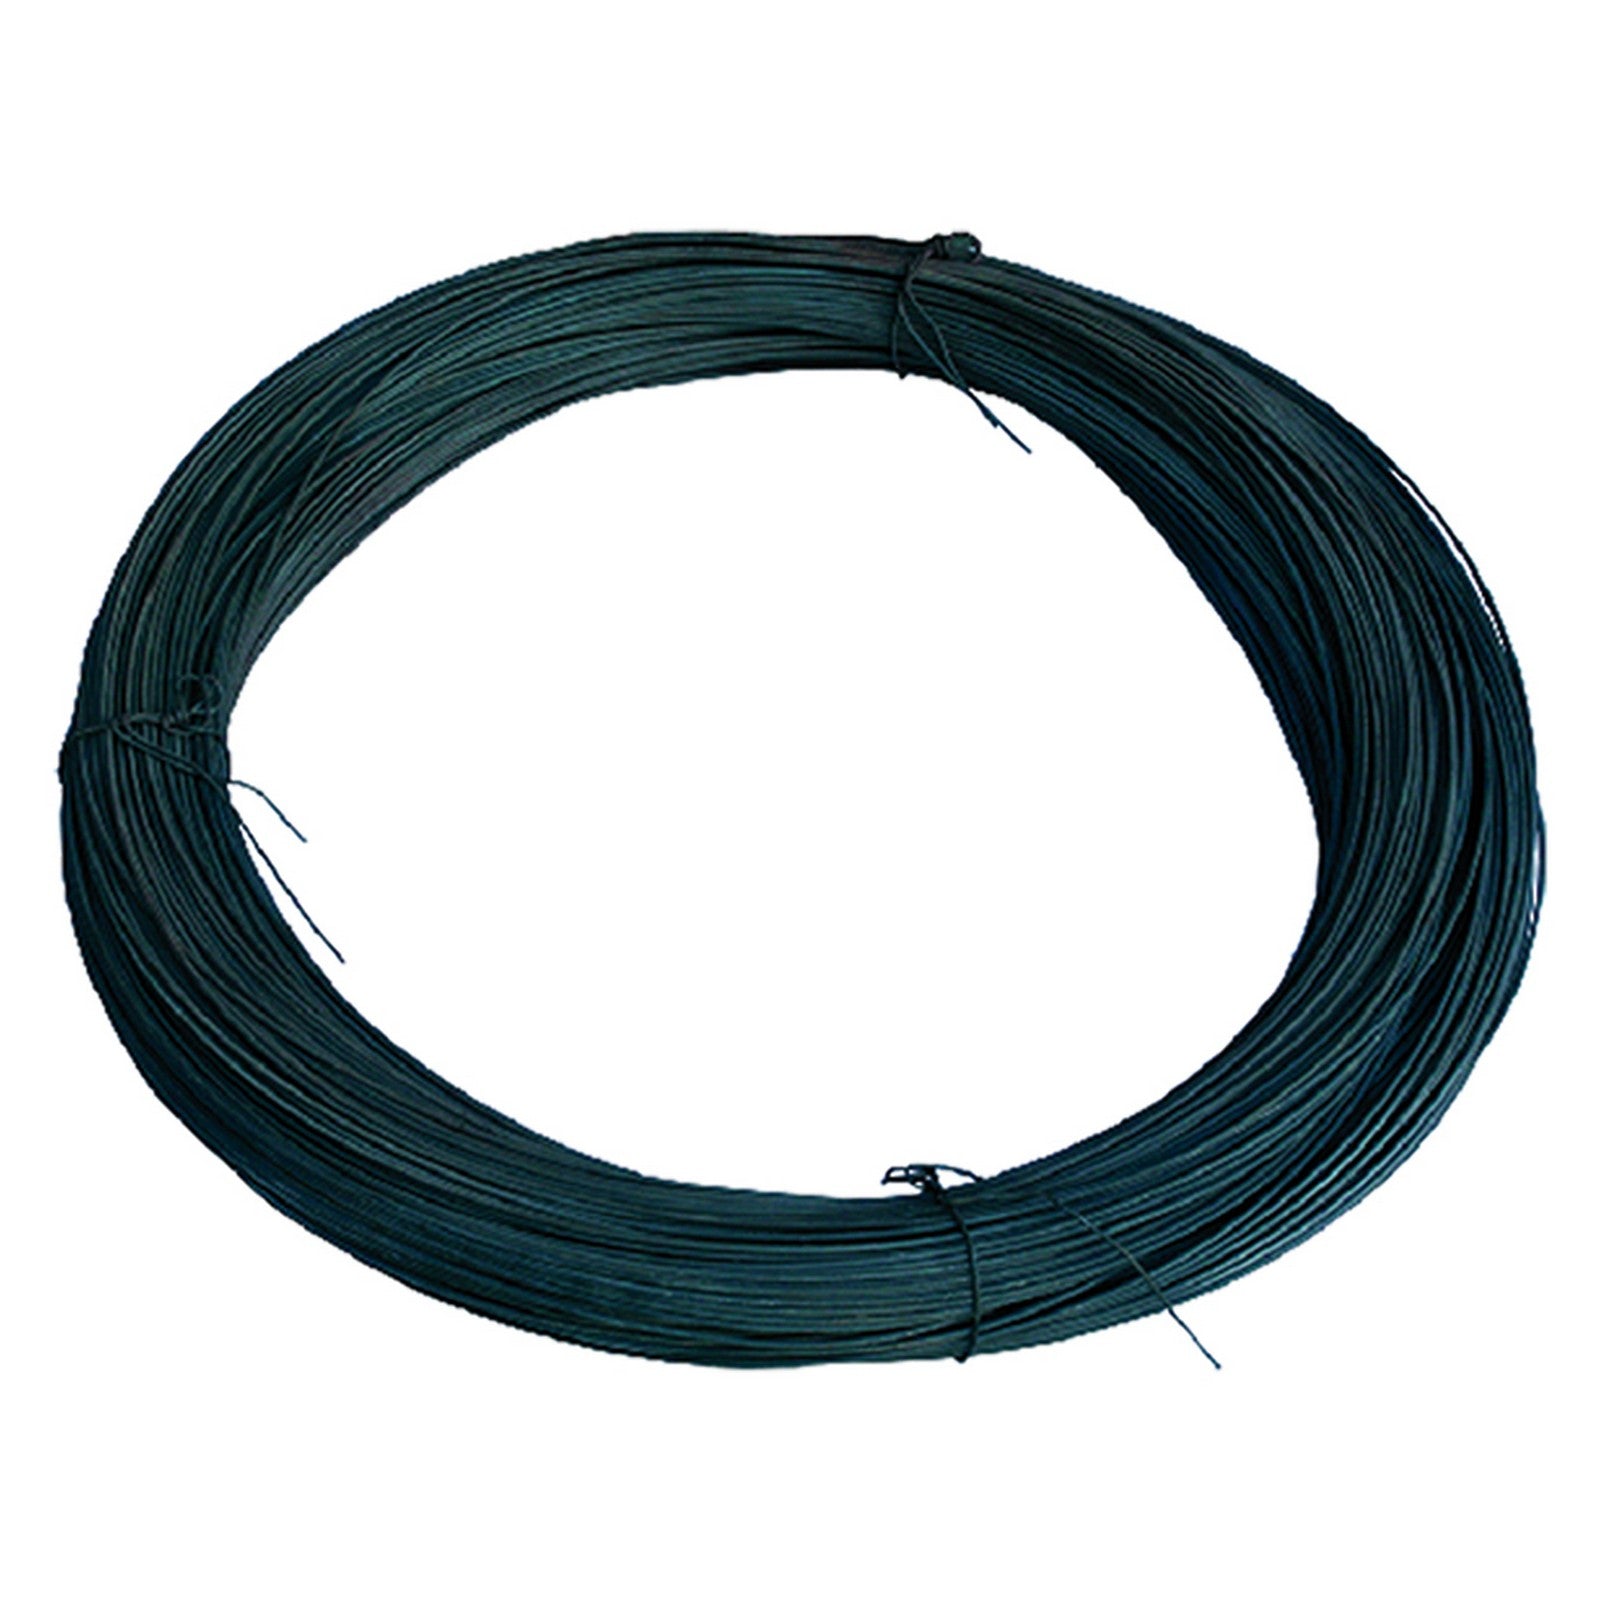 25kg filo ferro nero n. 14 mm 2,2 cod:ferx.107452nlm